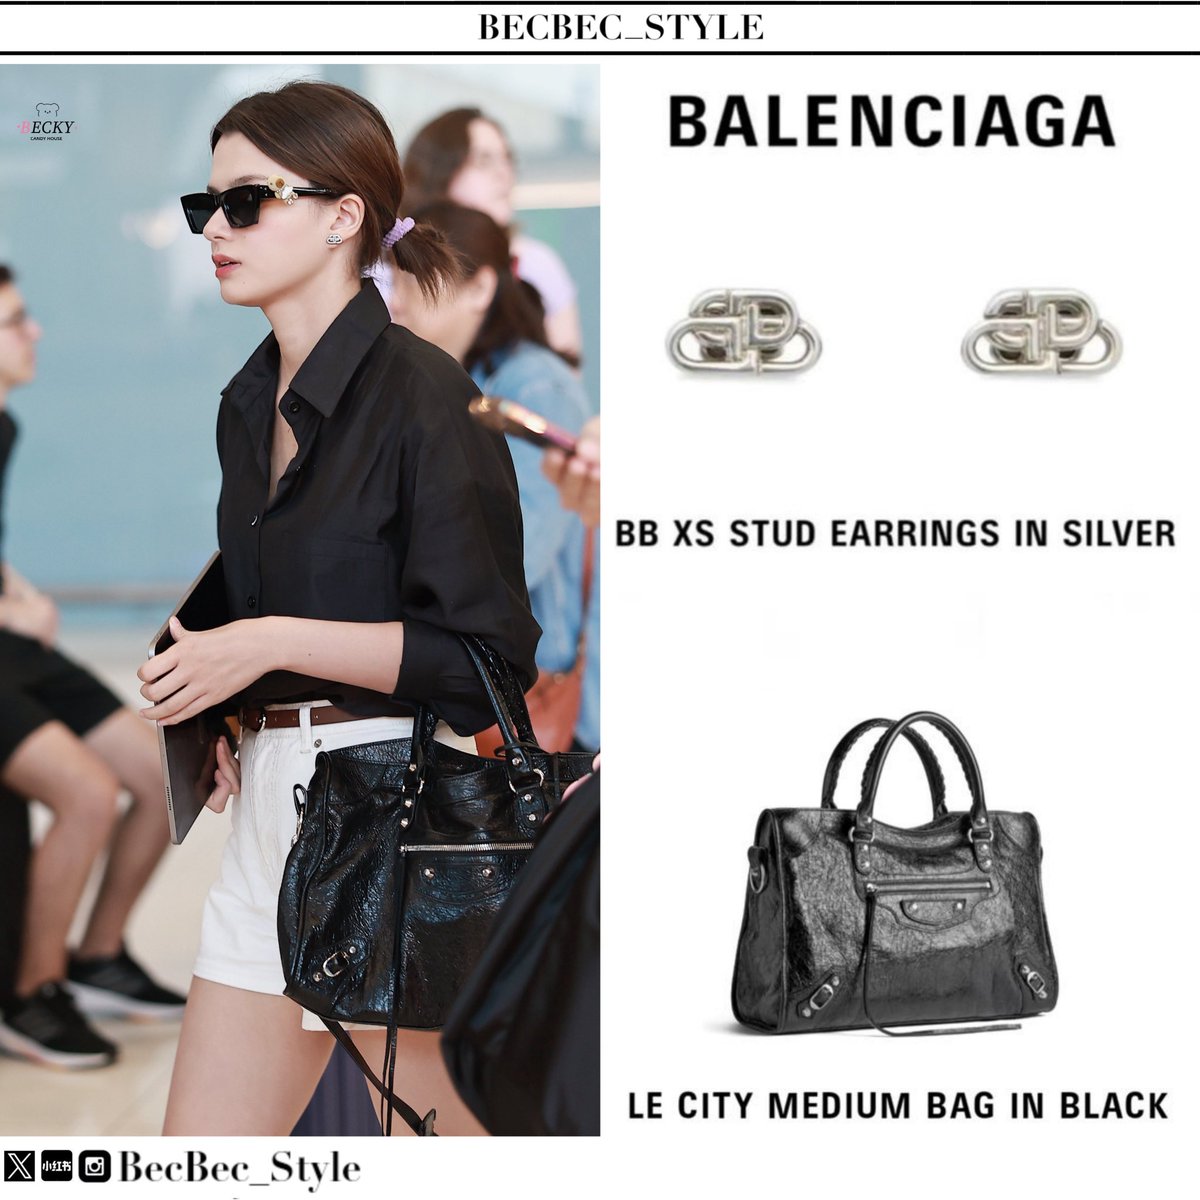 20240428 @AngelssBecky 🛬BKK
.
Bag & Earrings: #Balenciaga
.
#Beckysangels
#BalenciagaXBecky